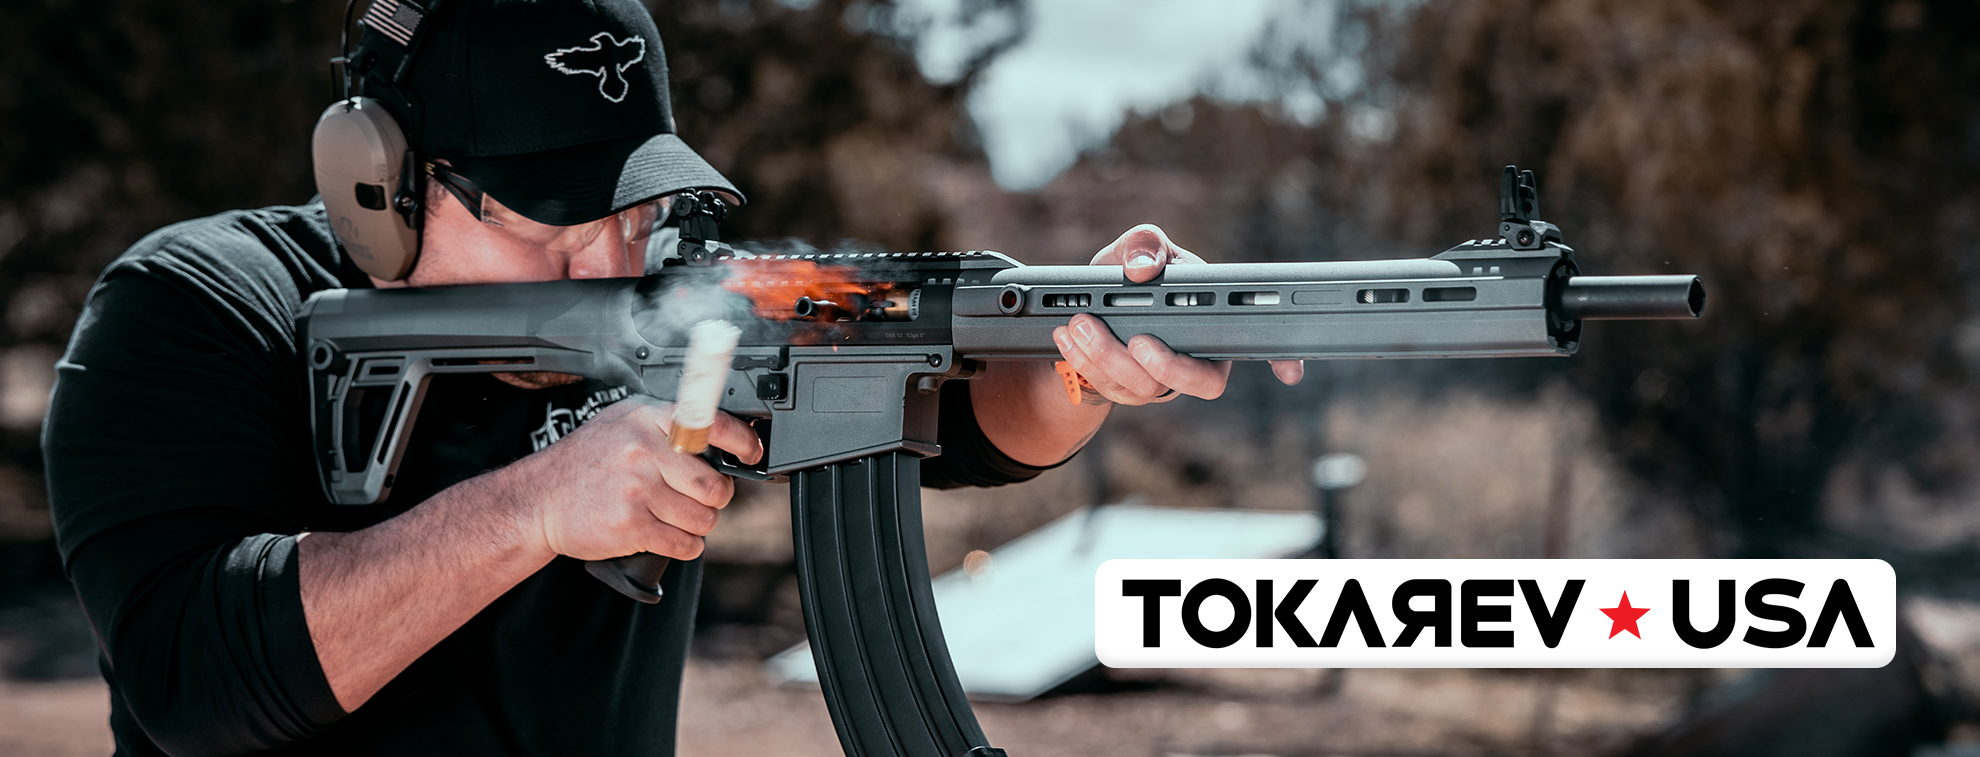 Tokarev USA - Shotguns that Perform